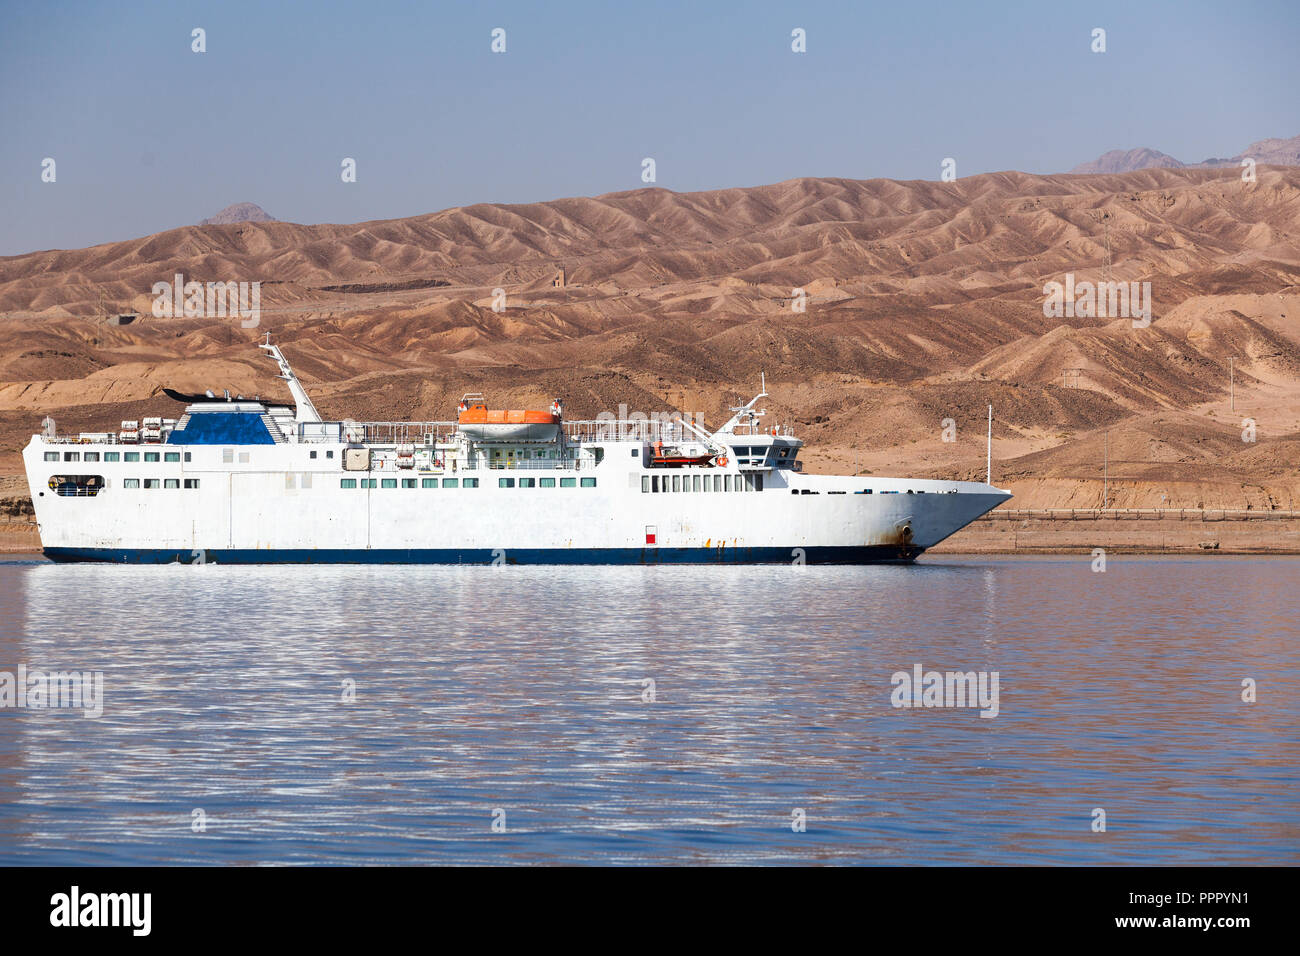 White passenger ferry enters Aqaba port, Red Sea, Jordan Stock Photo